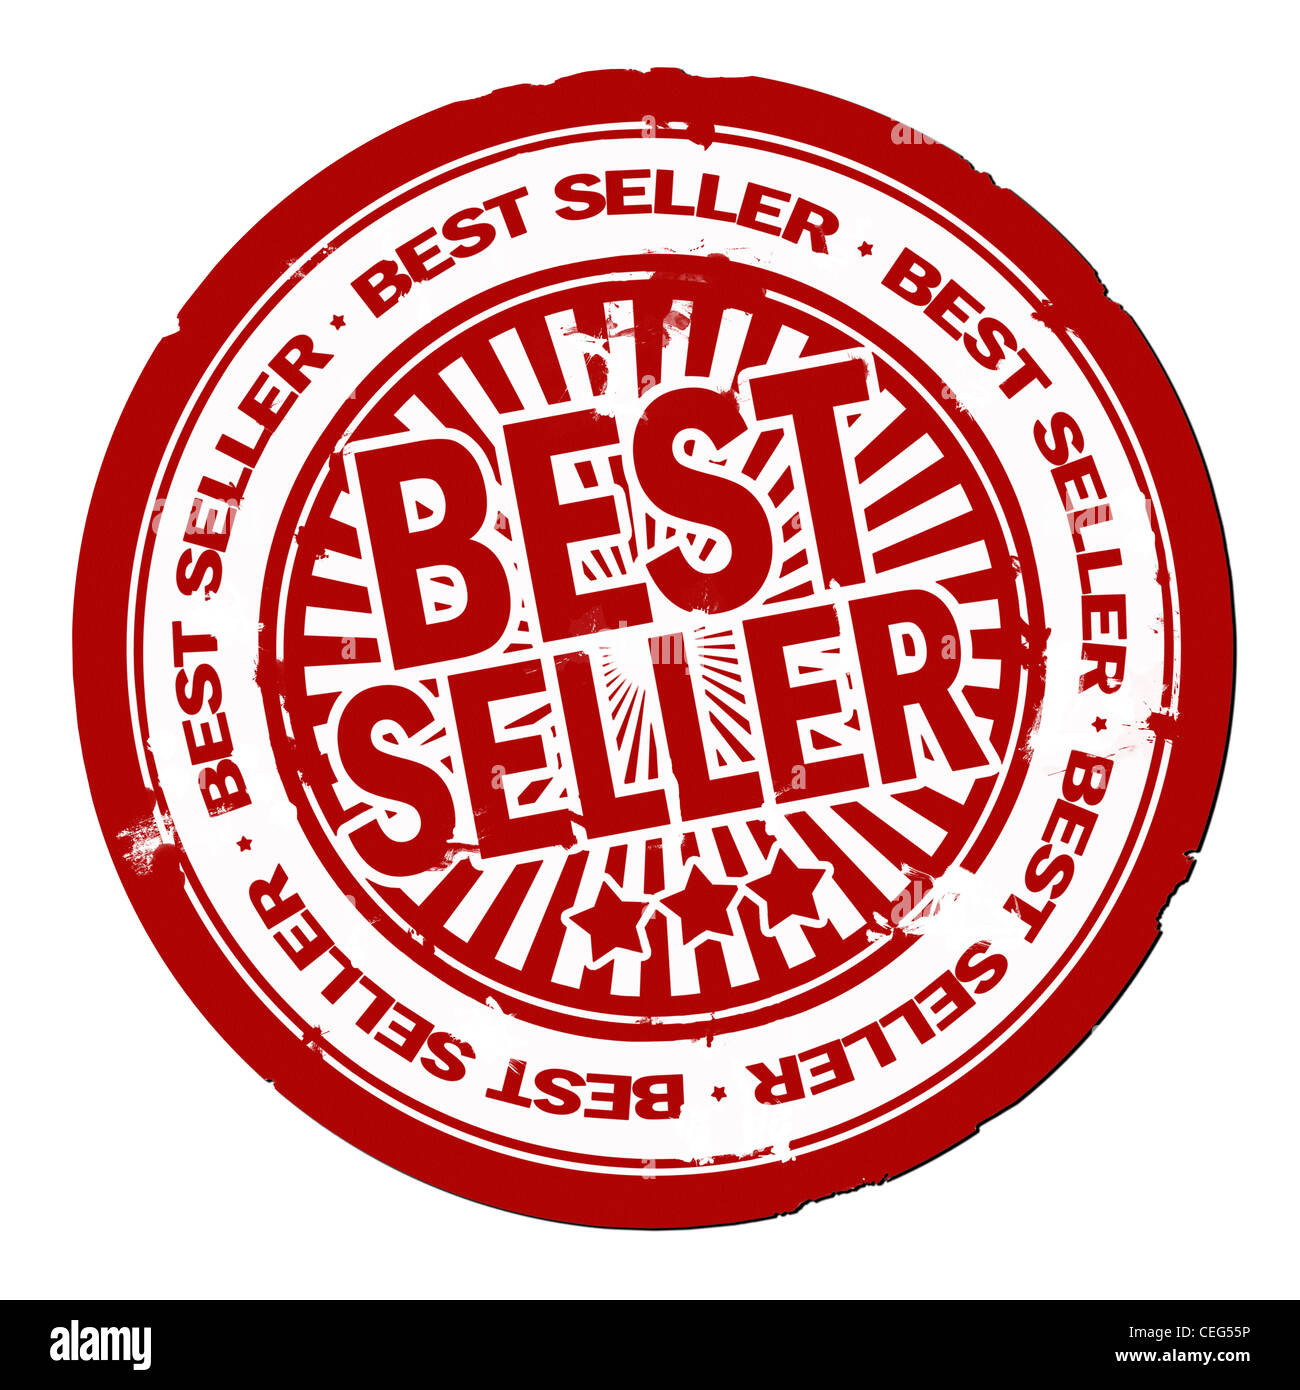 Best seller seal stock vector. Illustration of label - 163051855